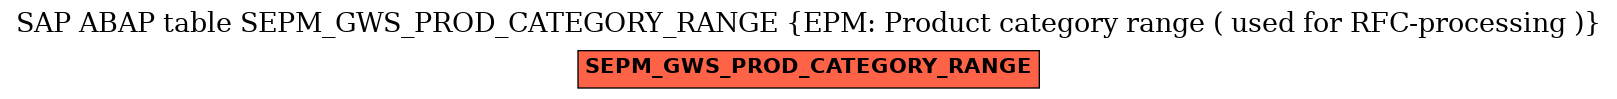 E-R Diagram for table SEPM_GWS_PROD_CATEGORY_RANGE (EPM: Product category range ( used for RFC-processing ))